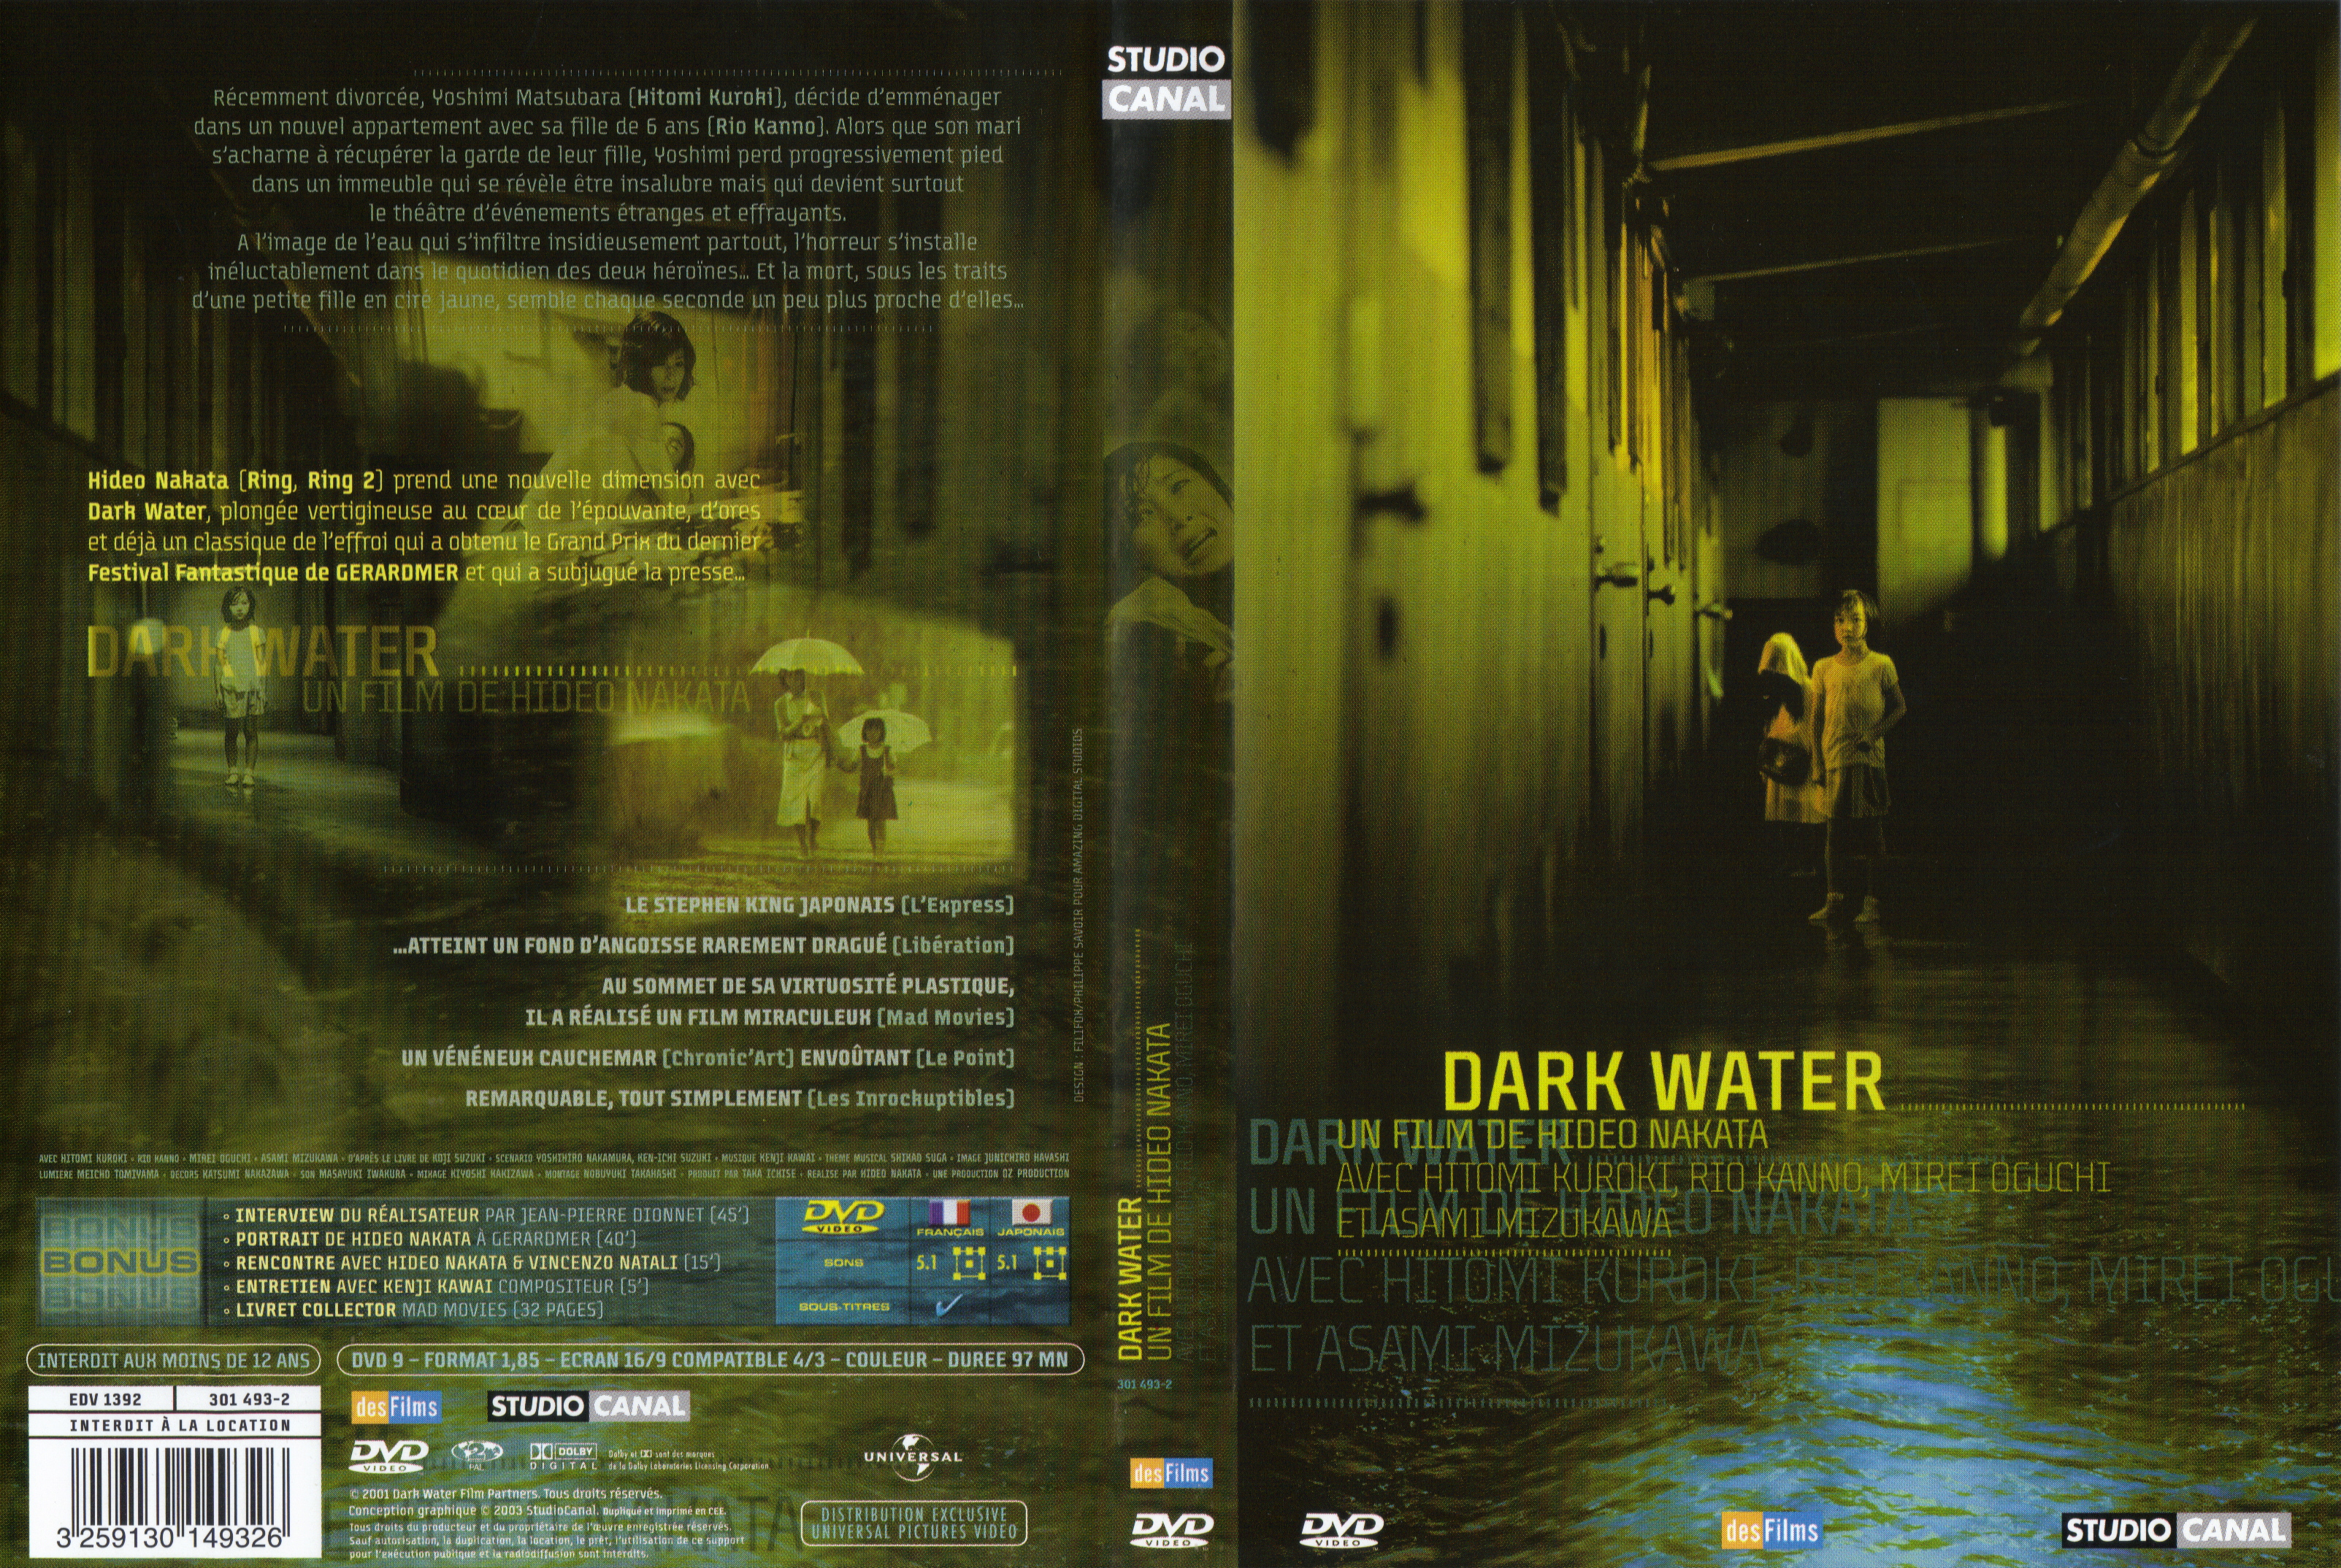 Jaquette DVD Dark Water v2